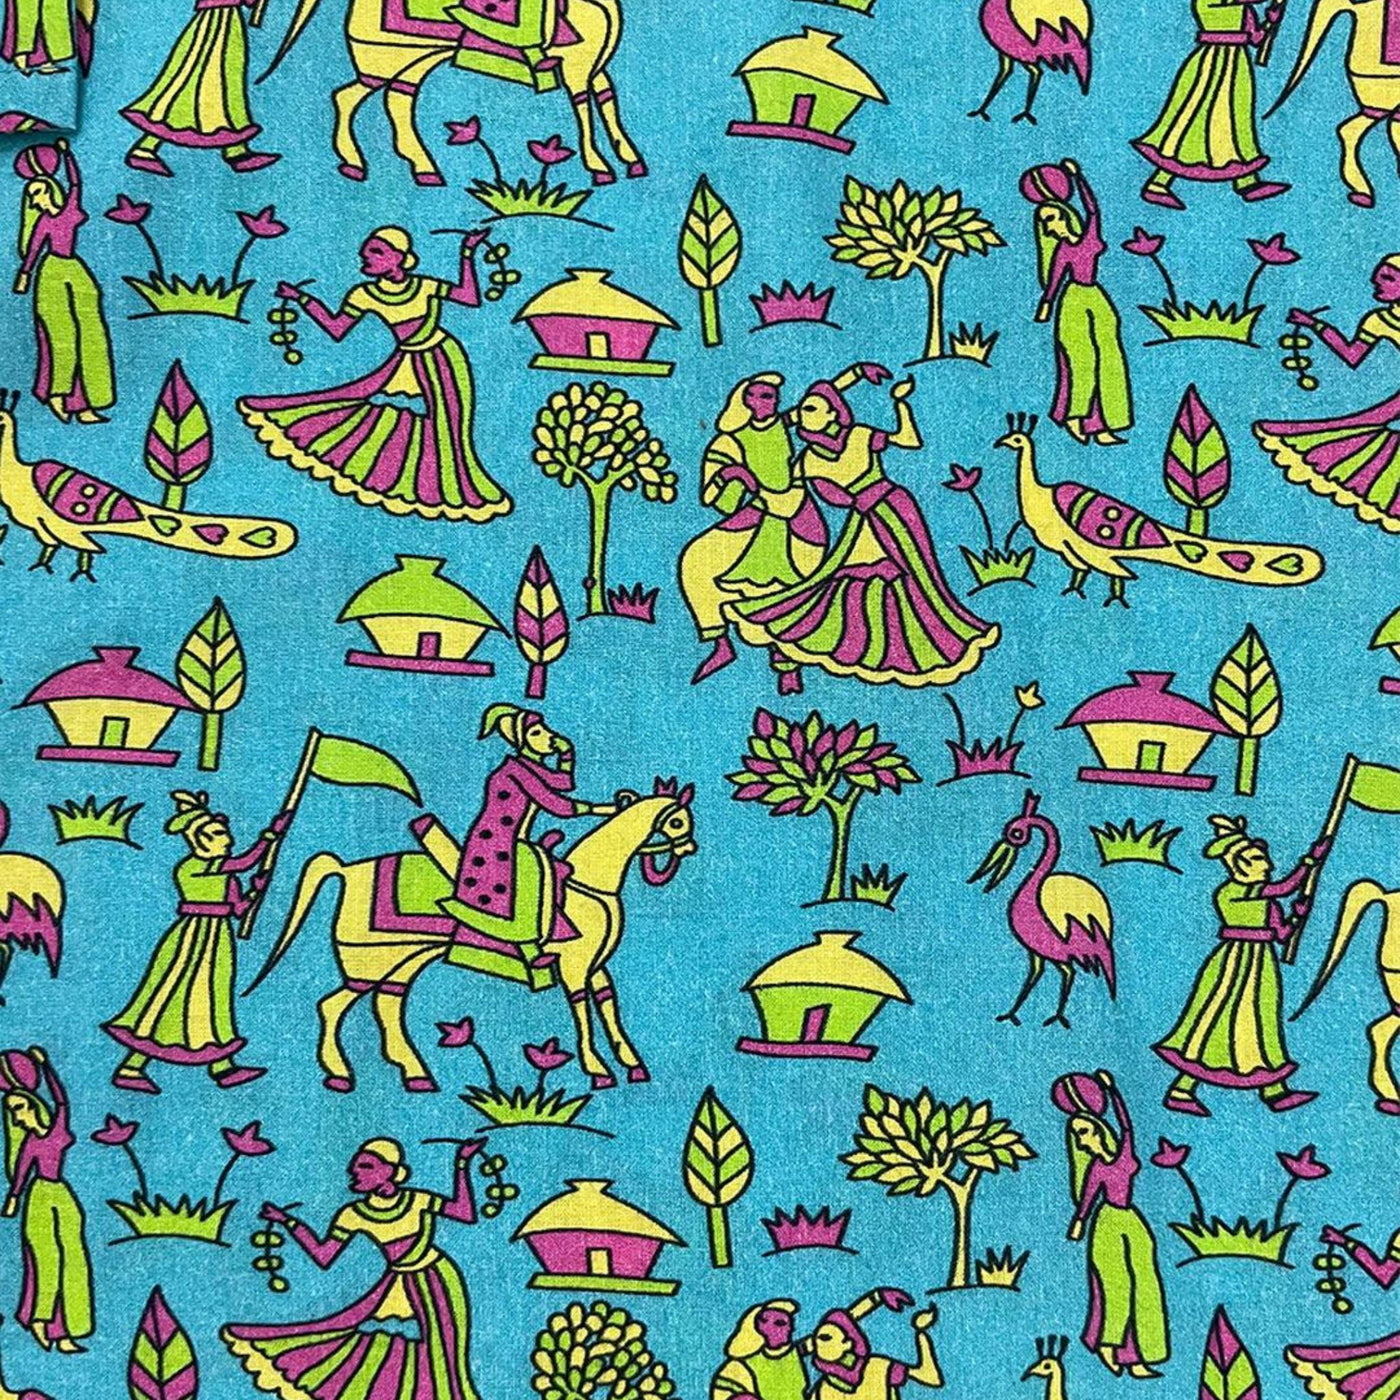 Pajama set for boys and girls - Folk Art Joeycare